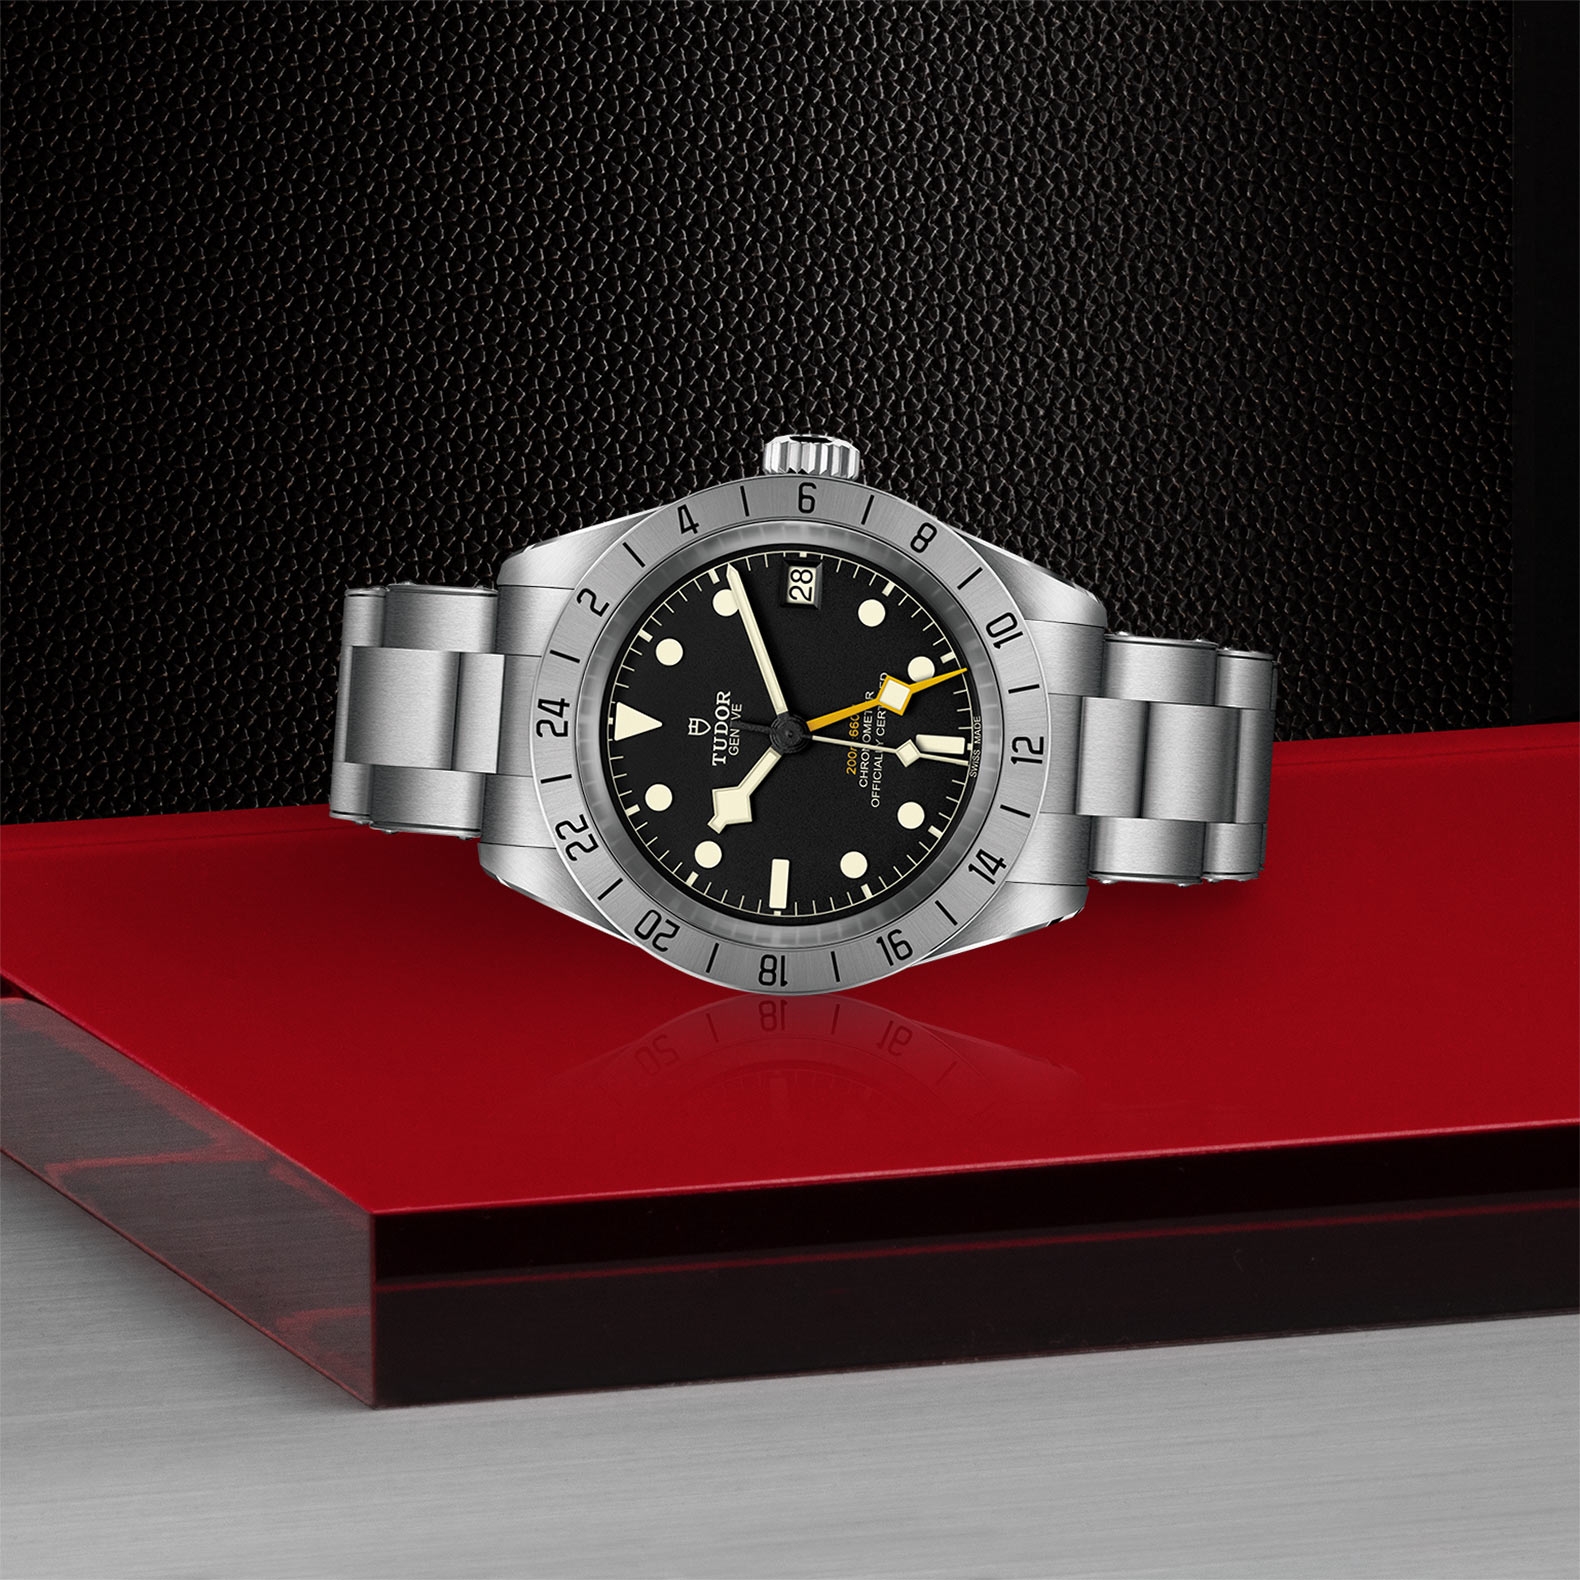 Tudor Black Bay Pro - M79470-0001 | Europe Watch Company